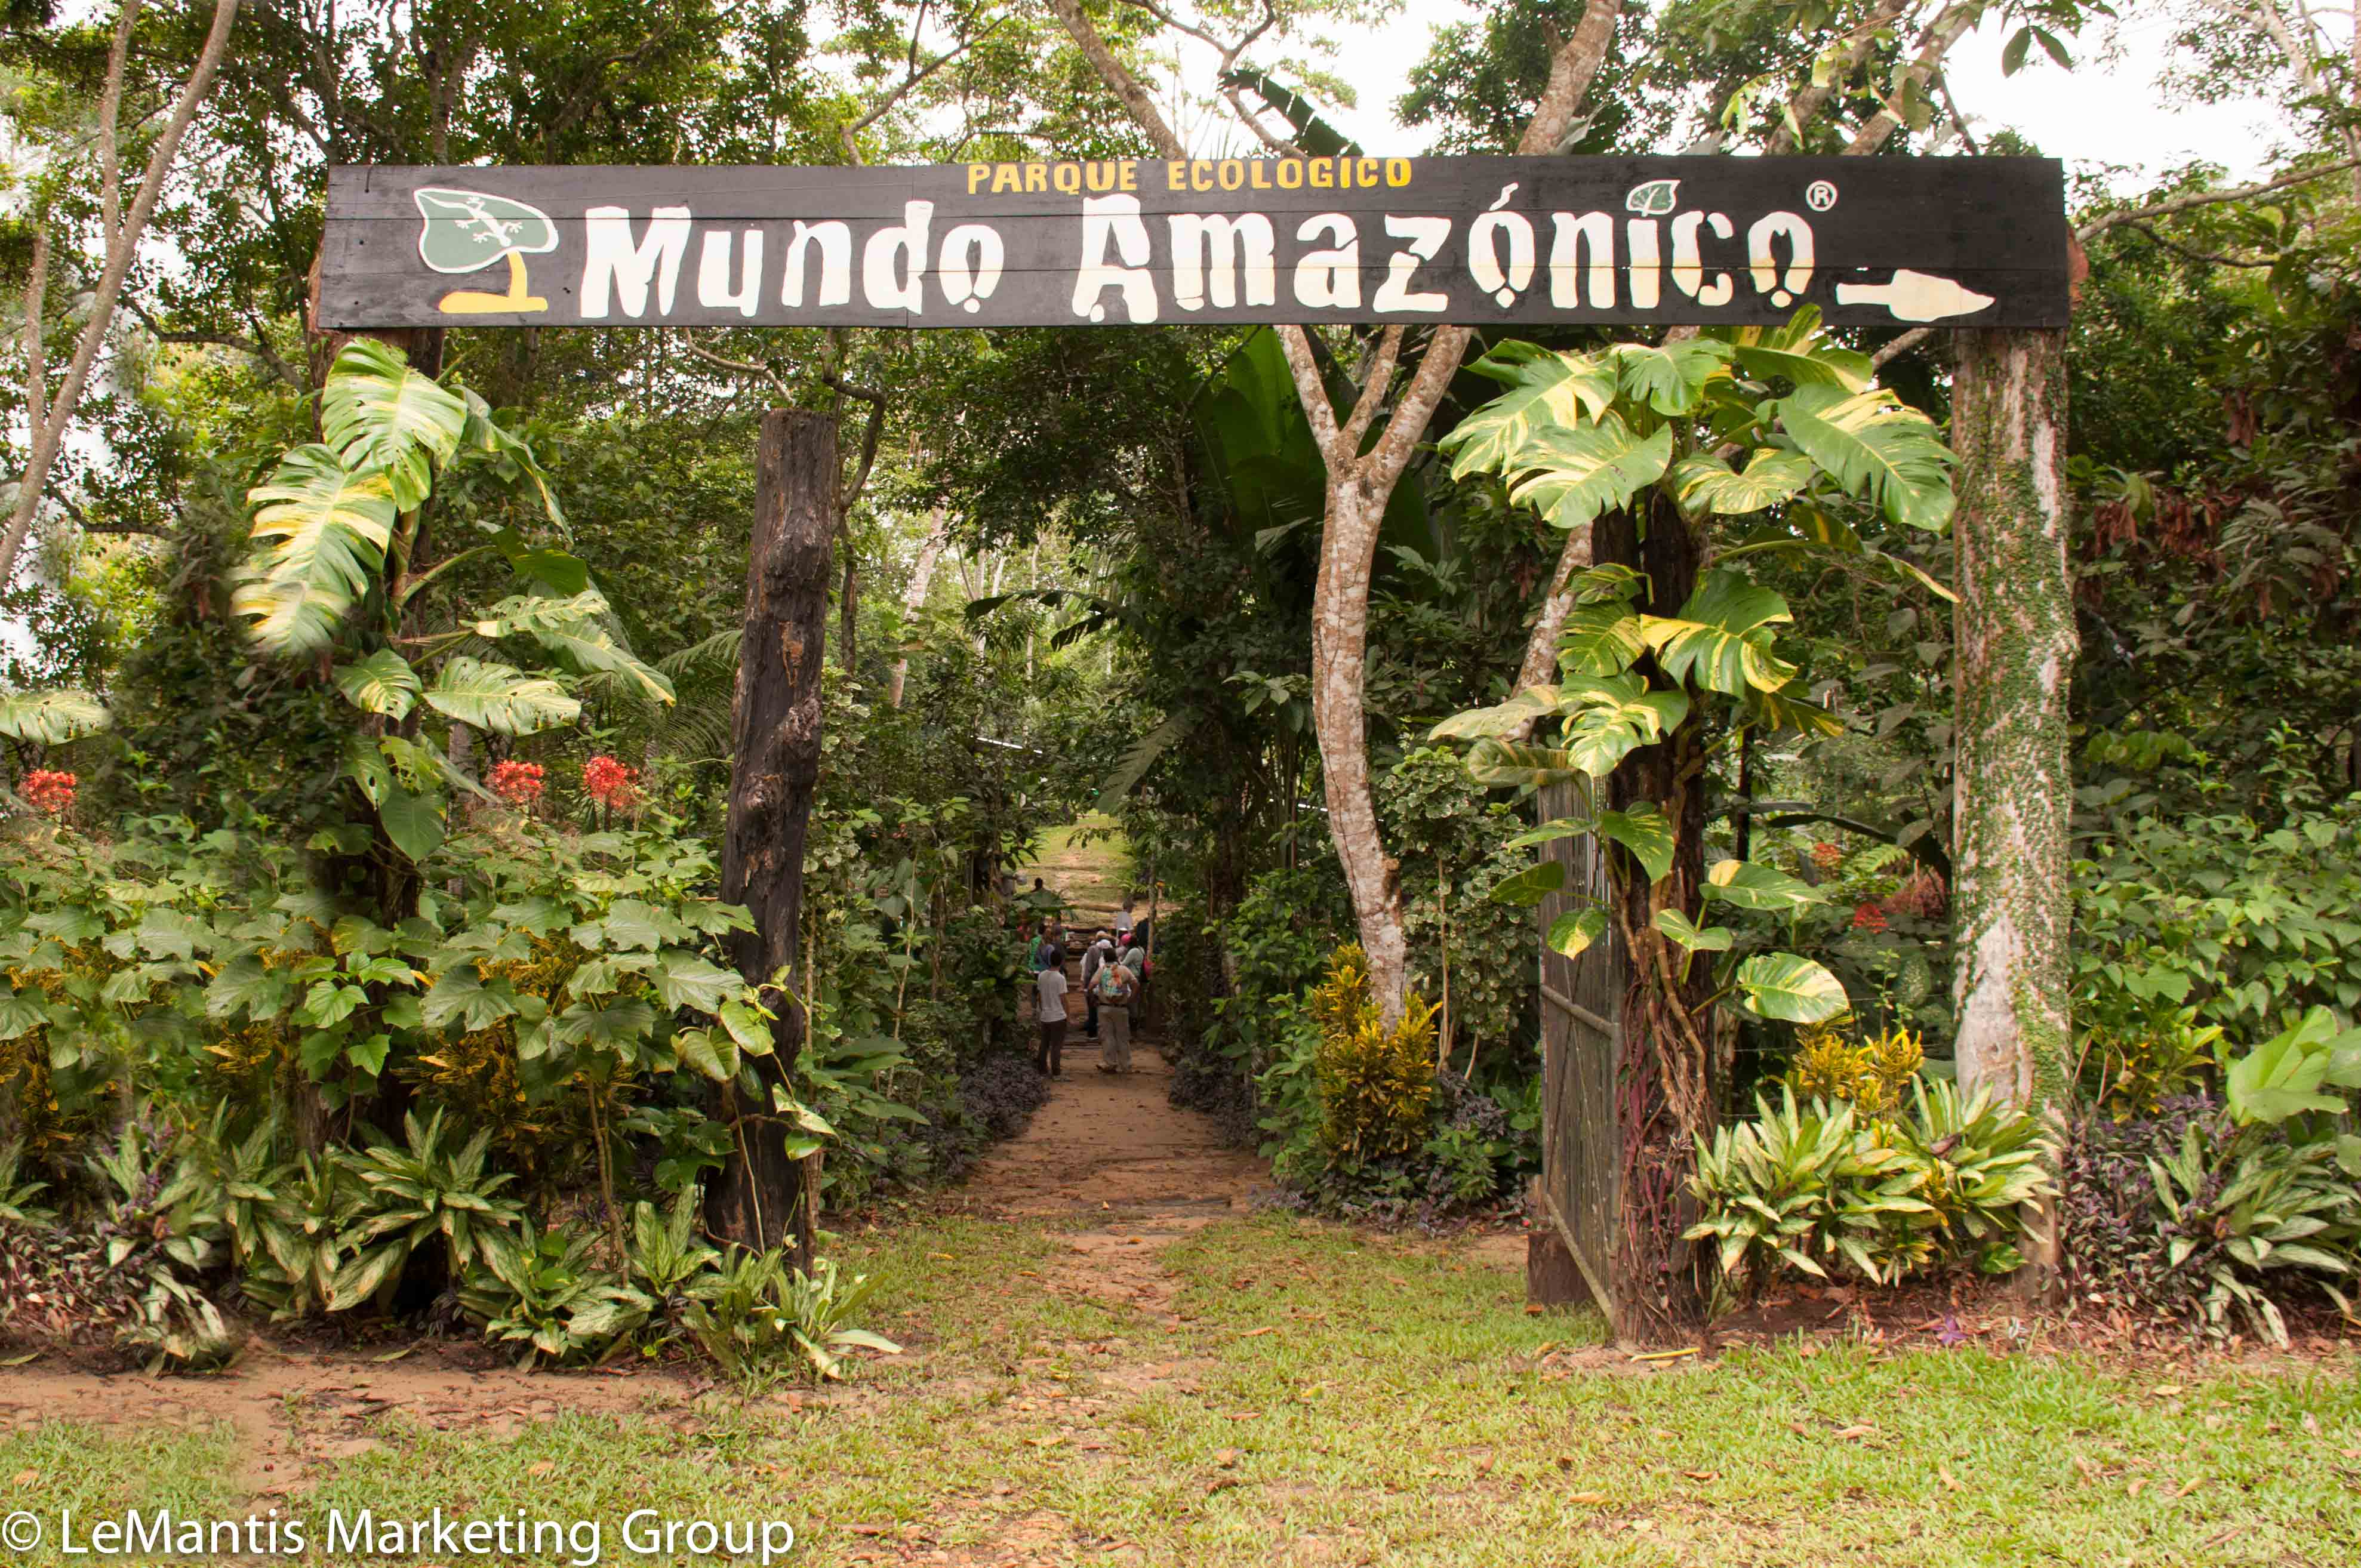 Parque-mundo-amazonico